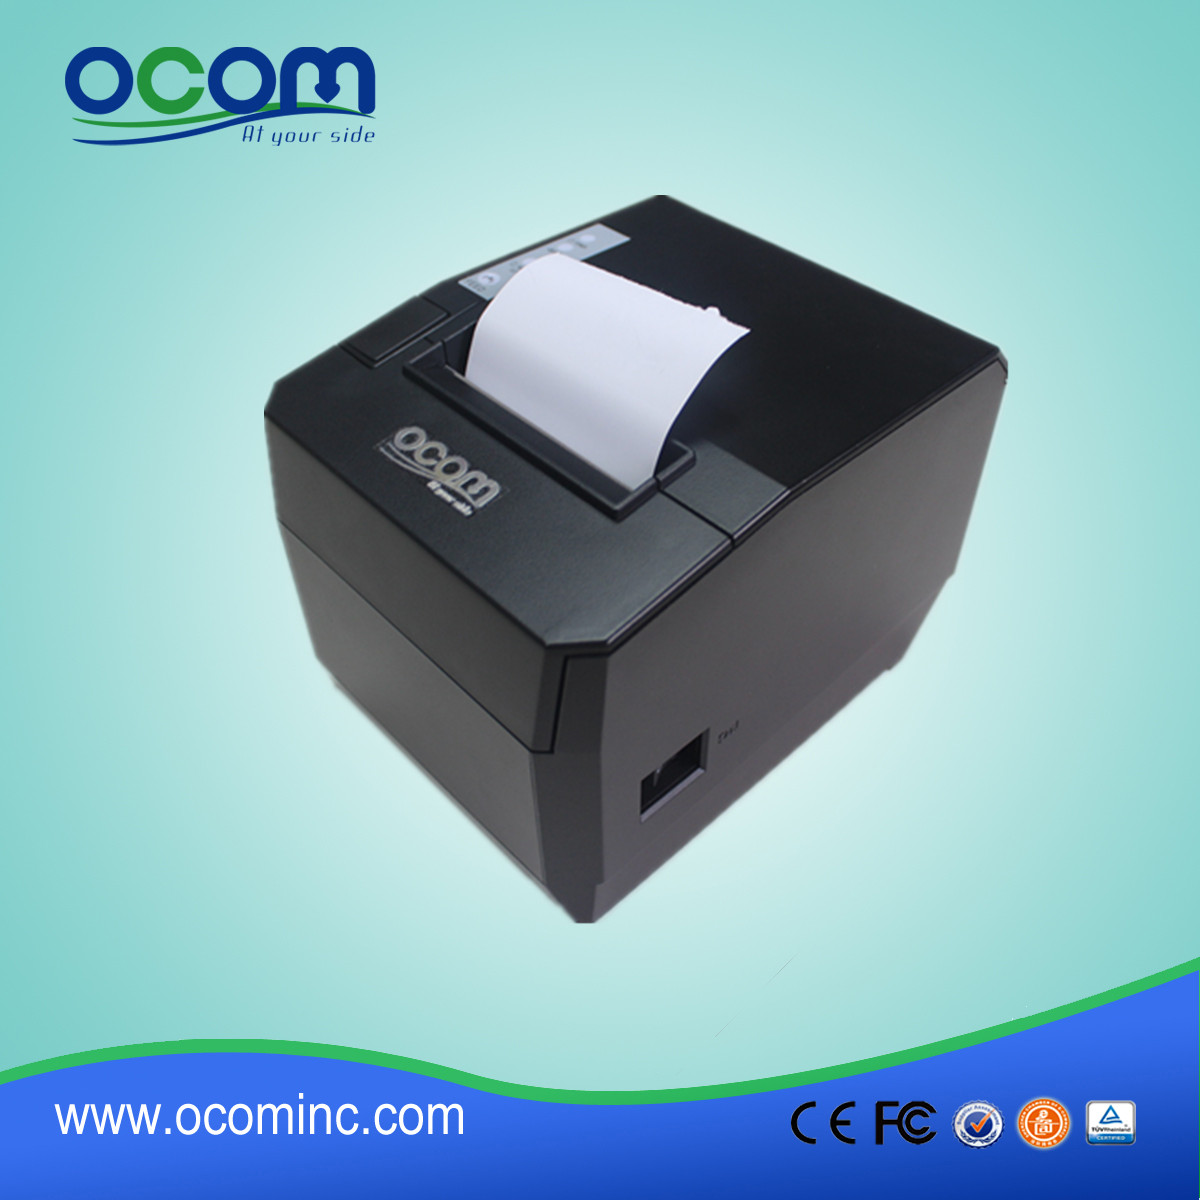 80 millimetri cucina stampante POS termica con alarmer opzionale OCPP-88A